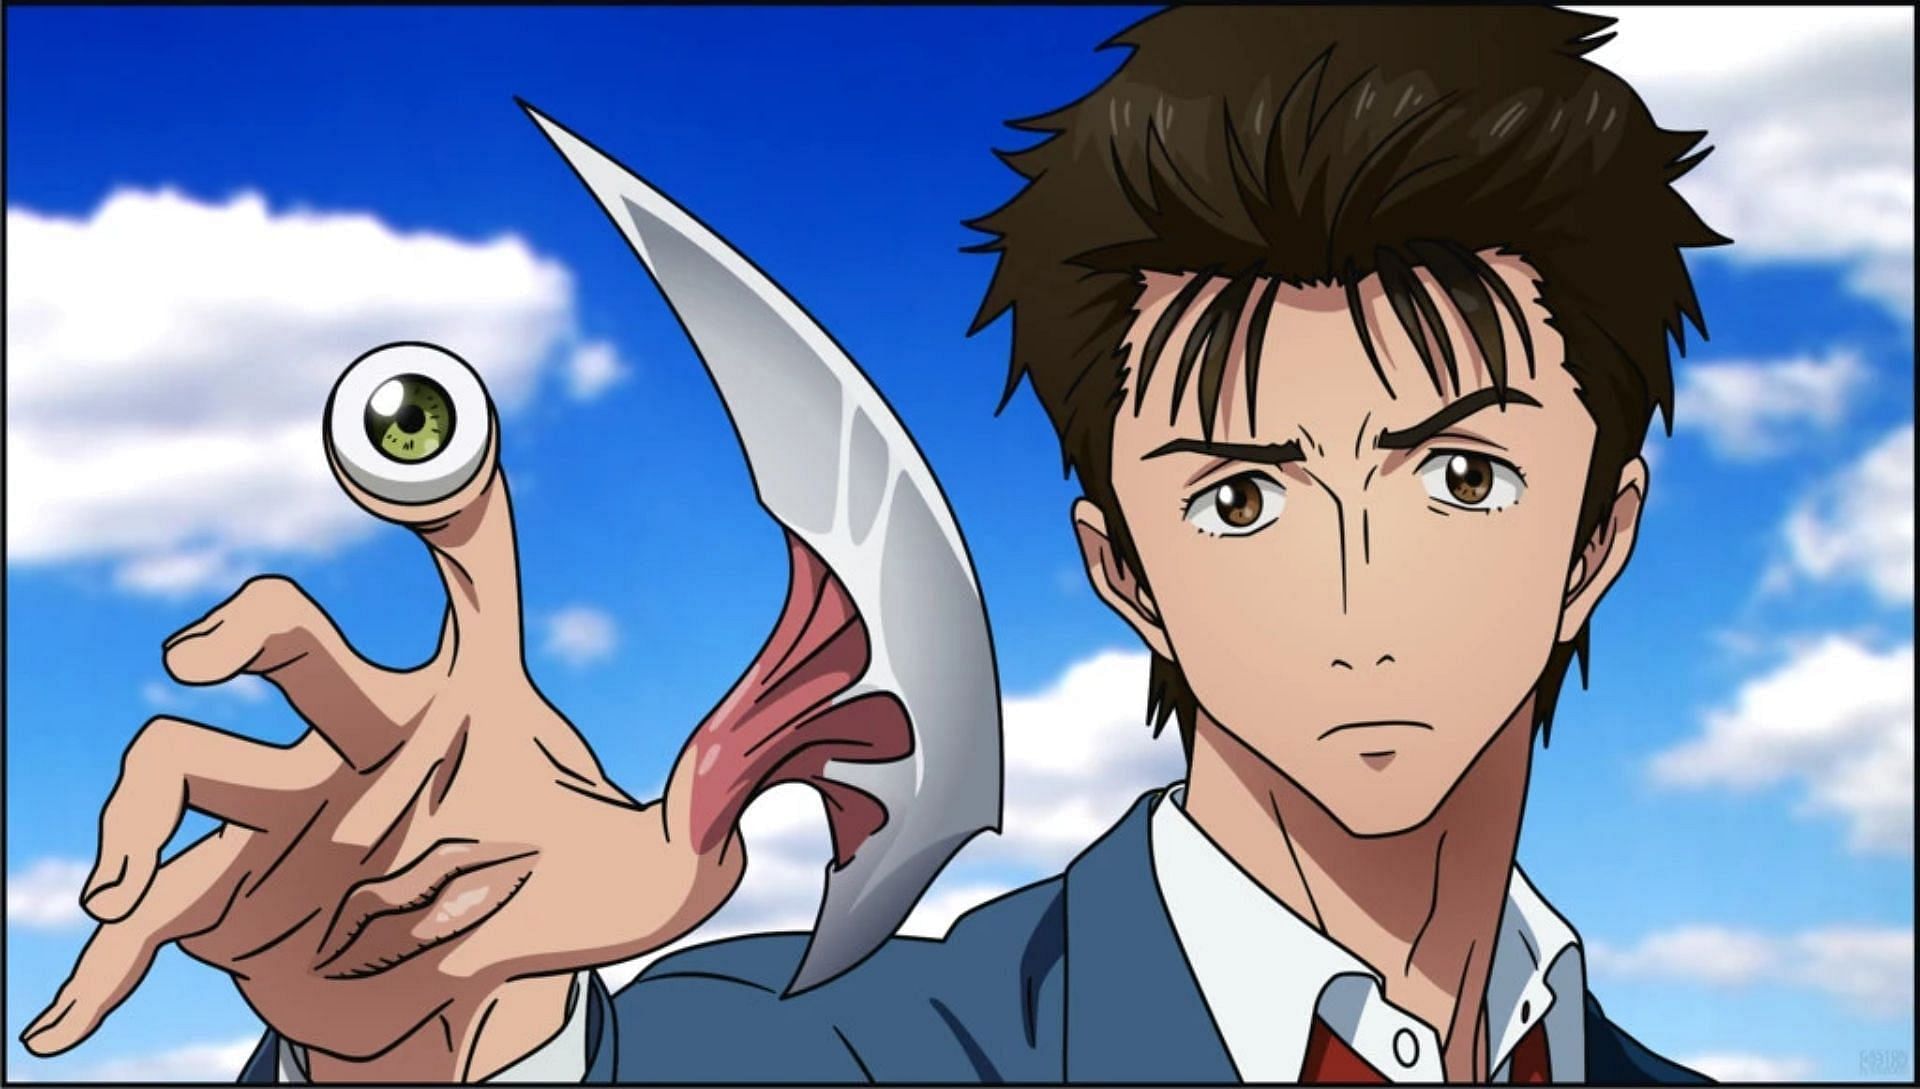 Short Anime with Amazing Plot - Ghibli Community | Facebook